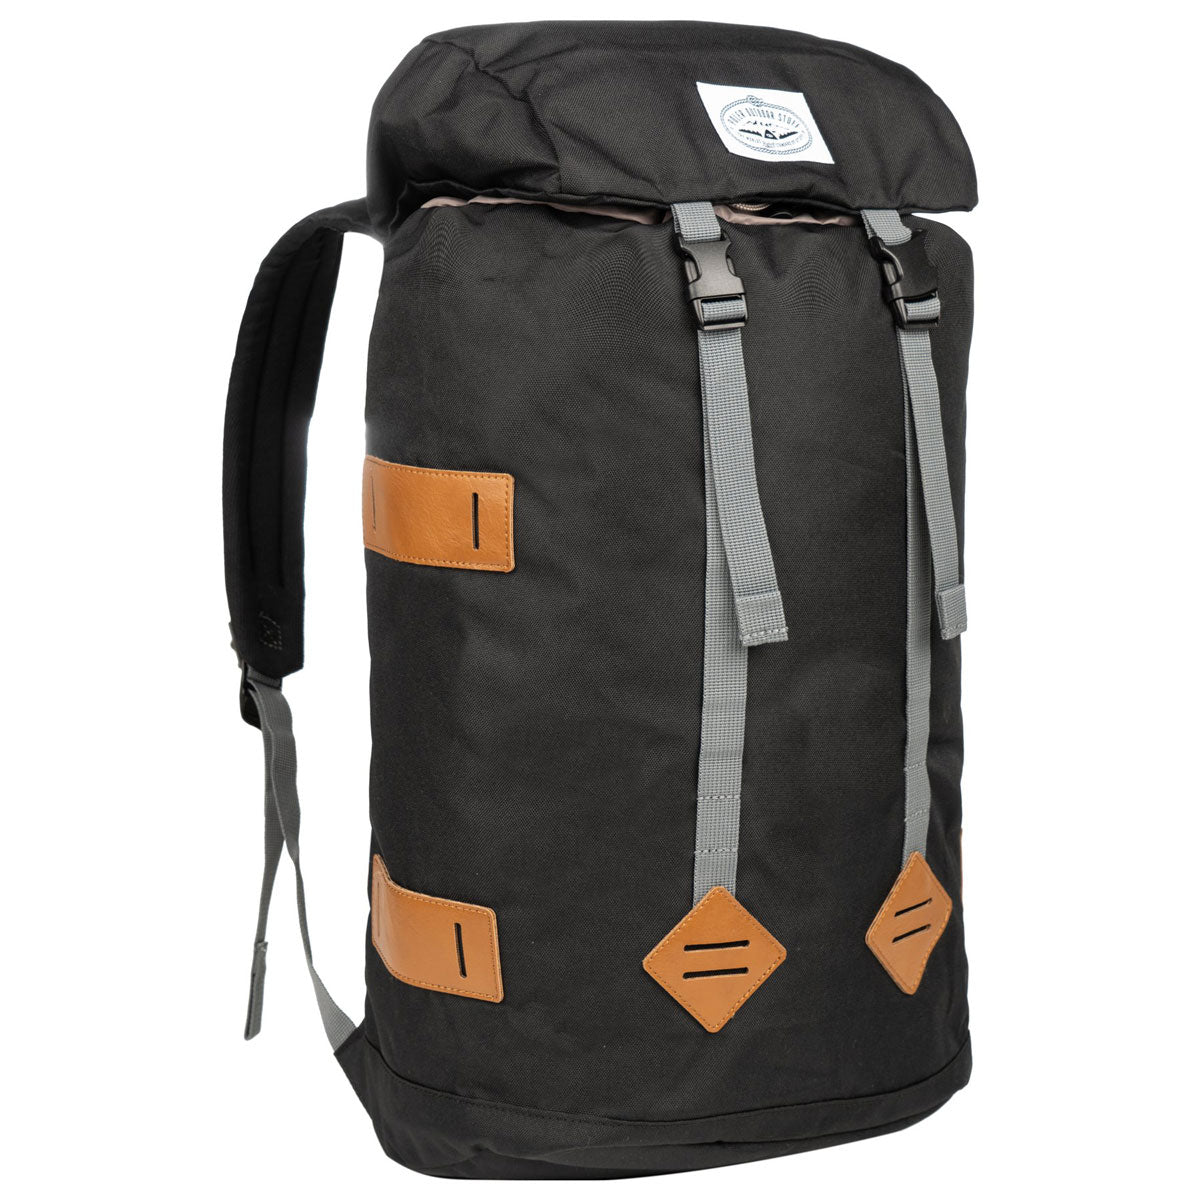 Poler Classic Rucksack Backpack - Black image 2